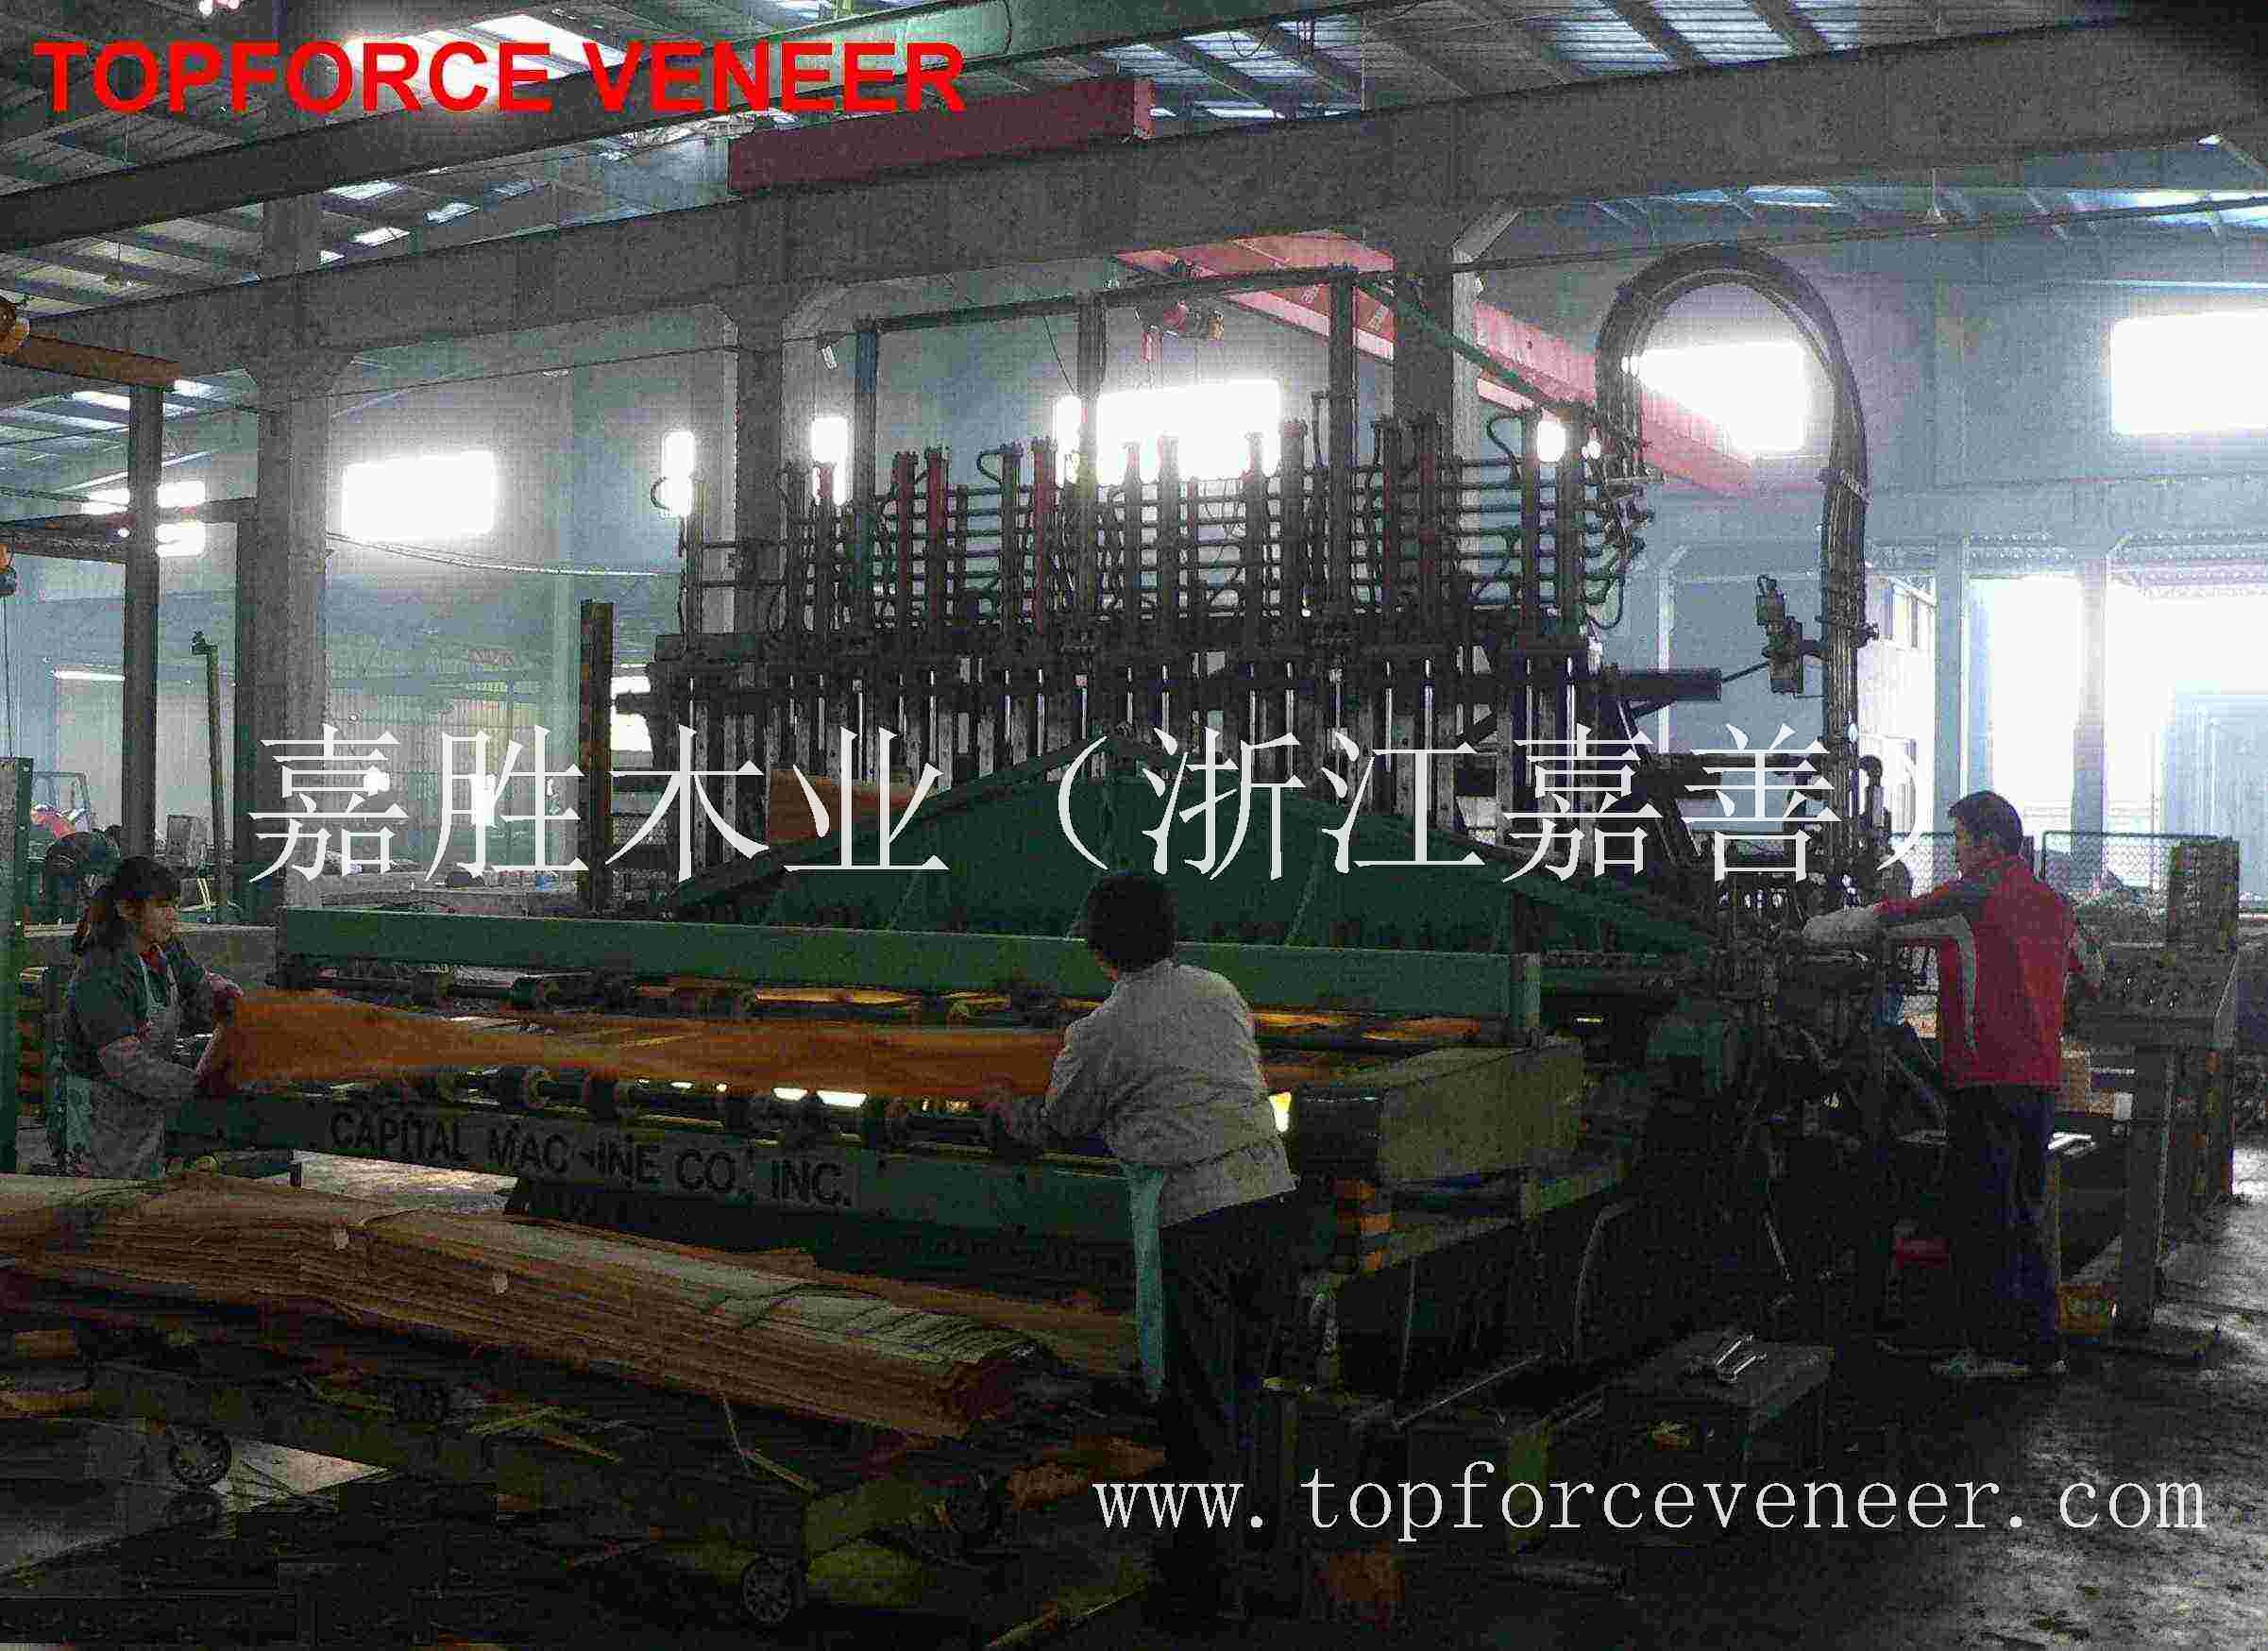 嘉善木皮生产商 ZheJiang JiaShan Veneer Production Factory